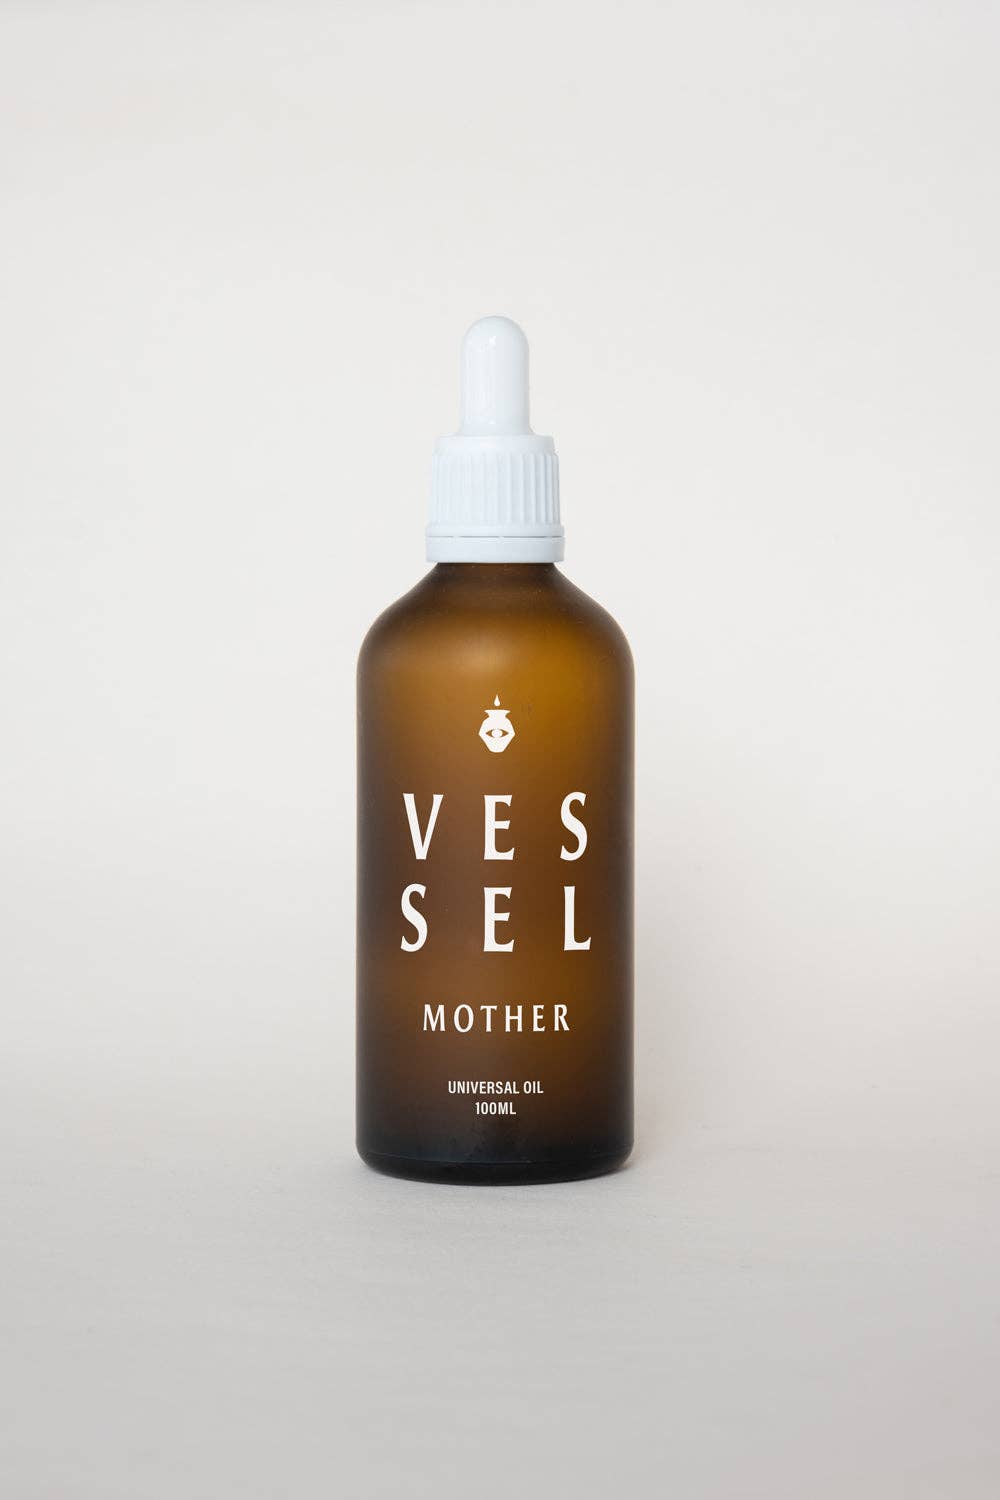 Vessel Scent - Mother Universal Oil